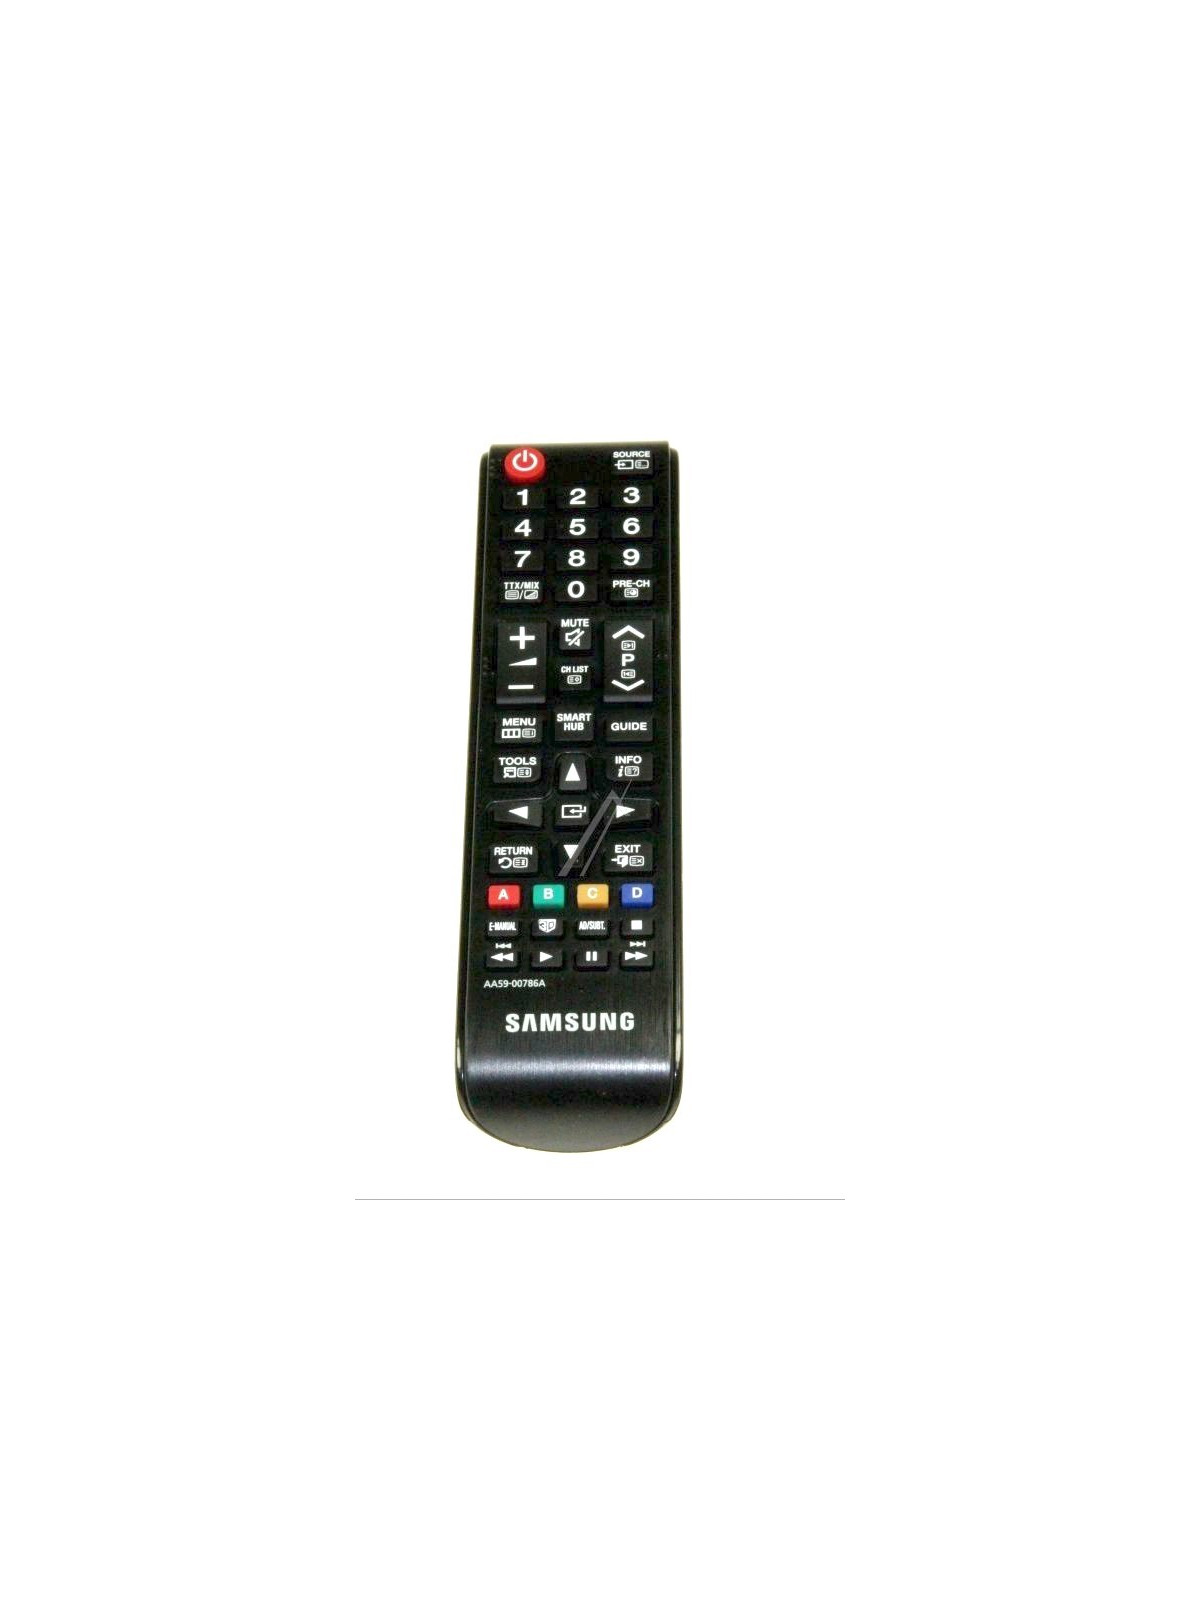 Télécommande Samsung UE46F6640 - TV écran lcd